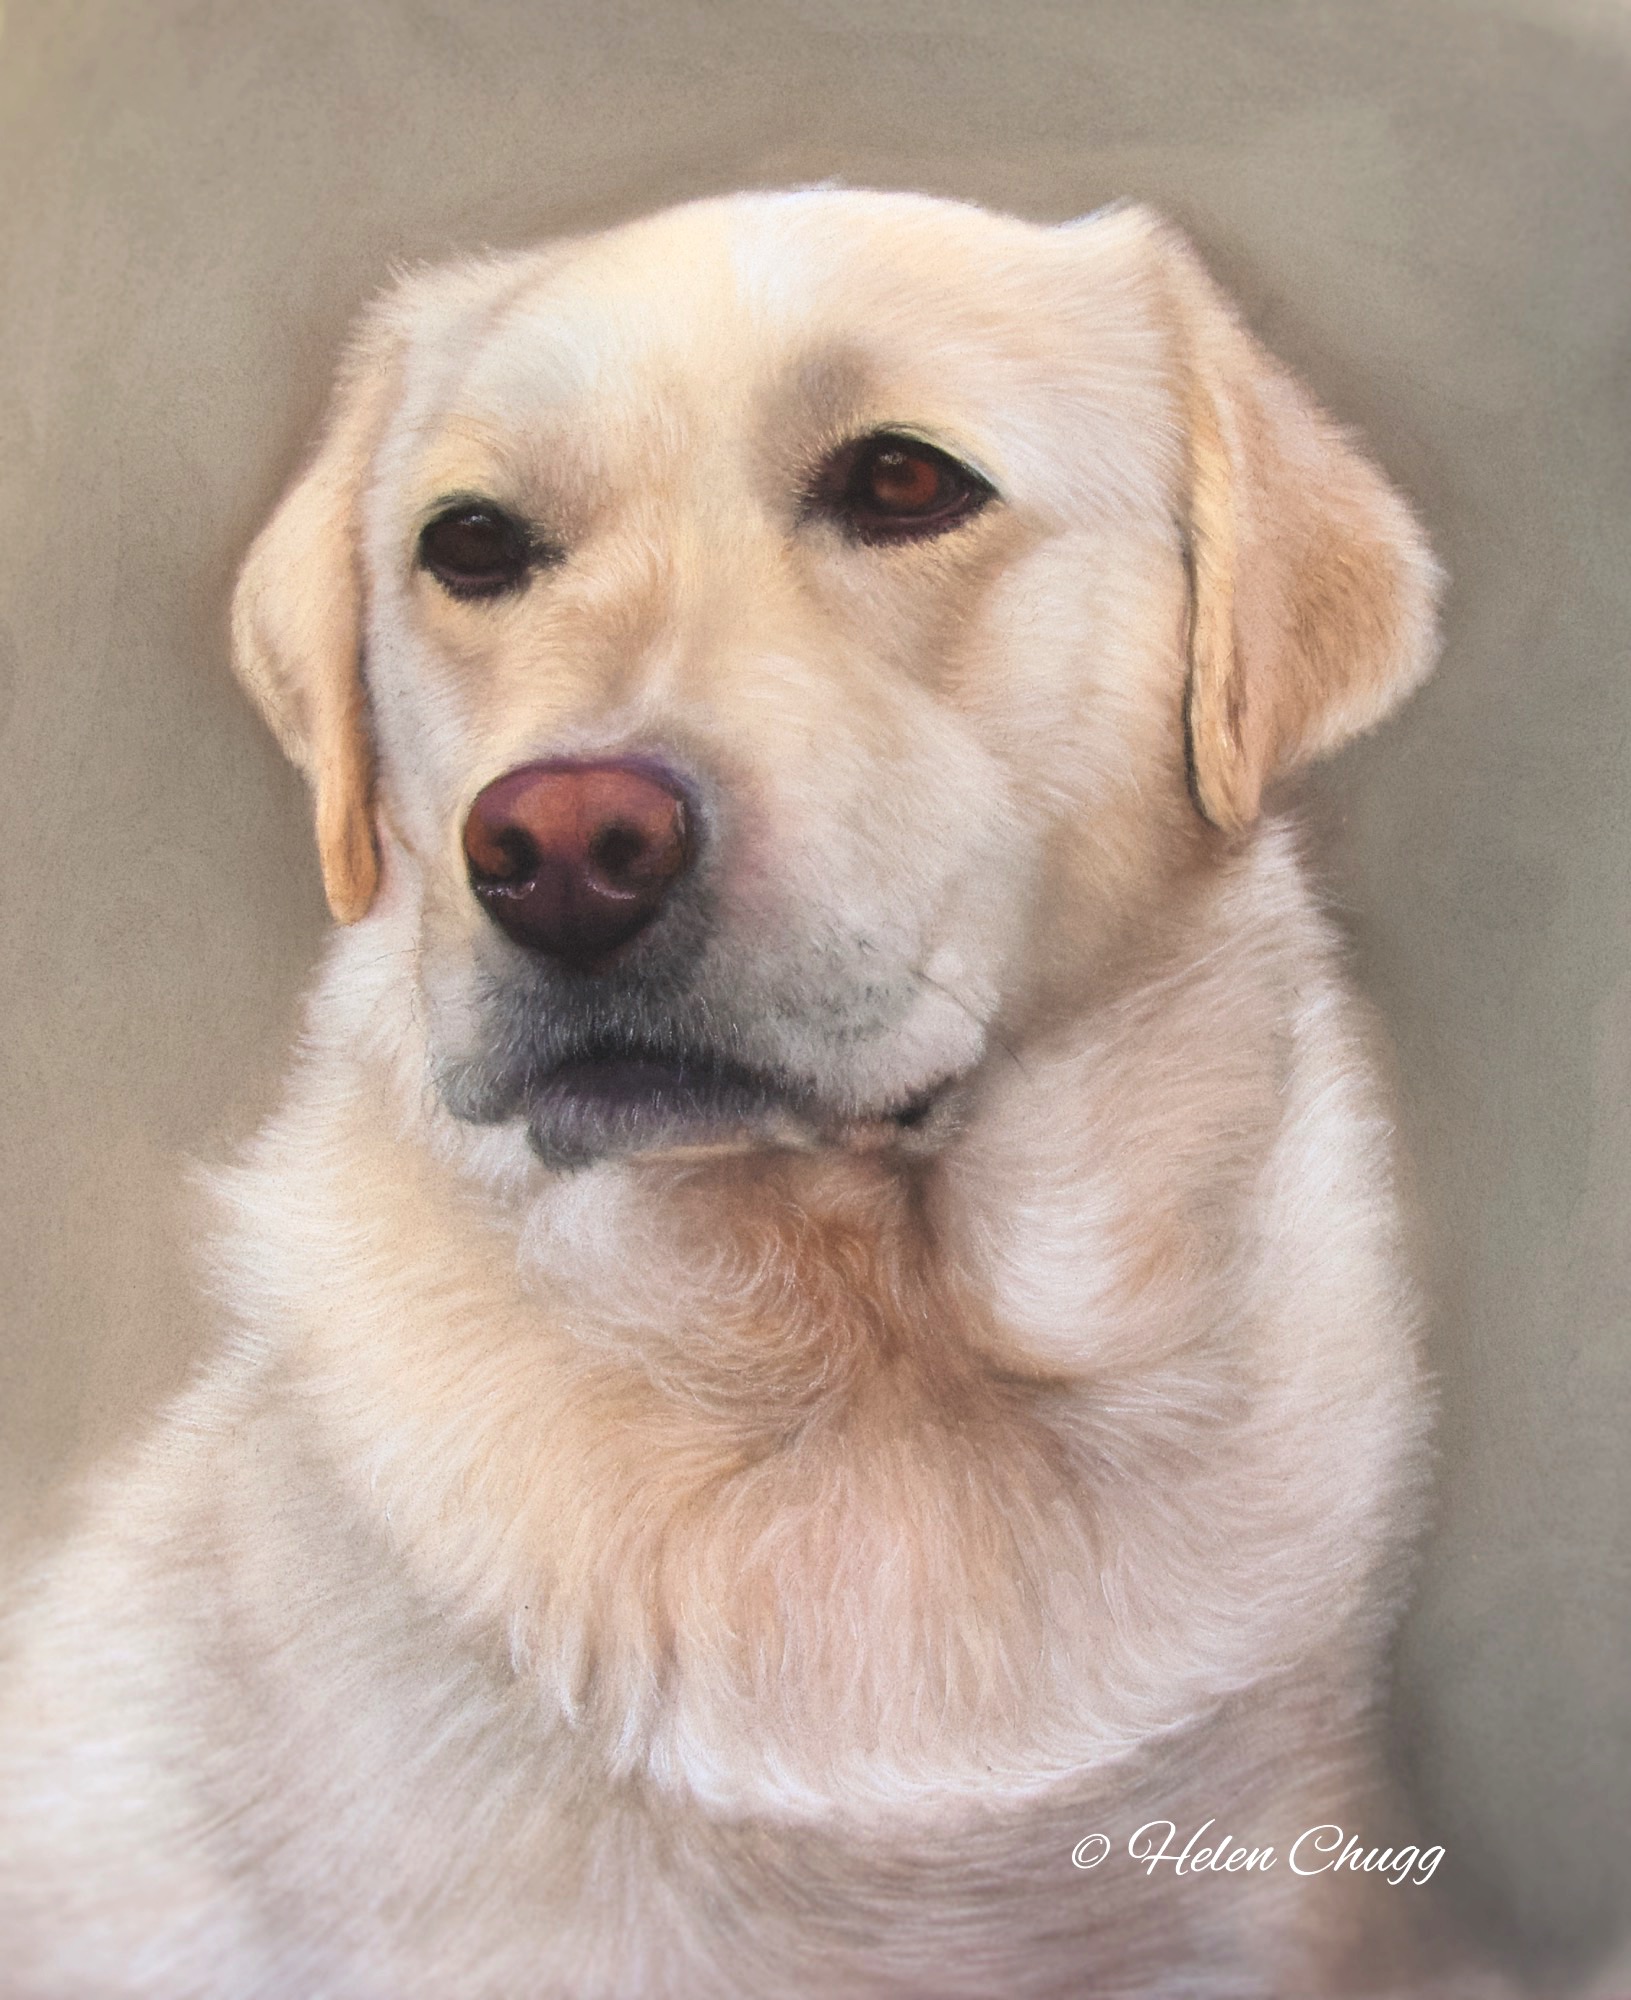 soft pastel colour dog against a beige background